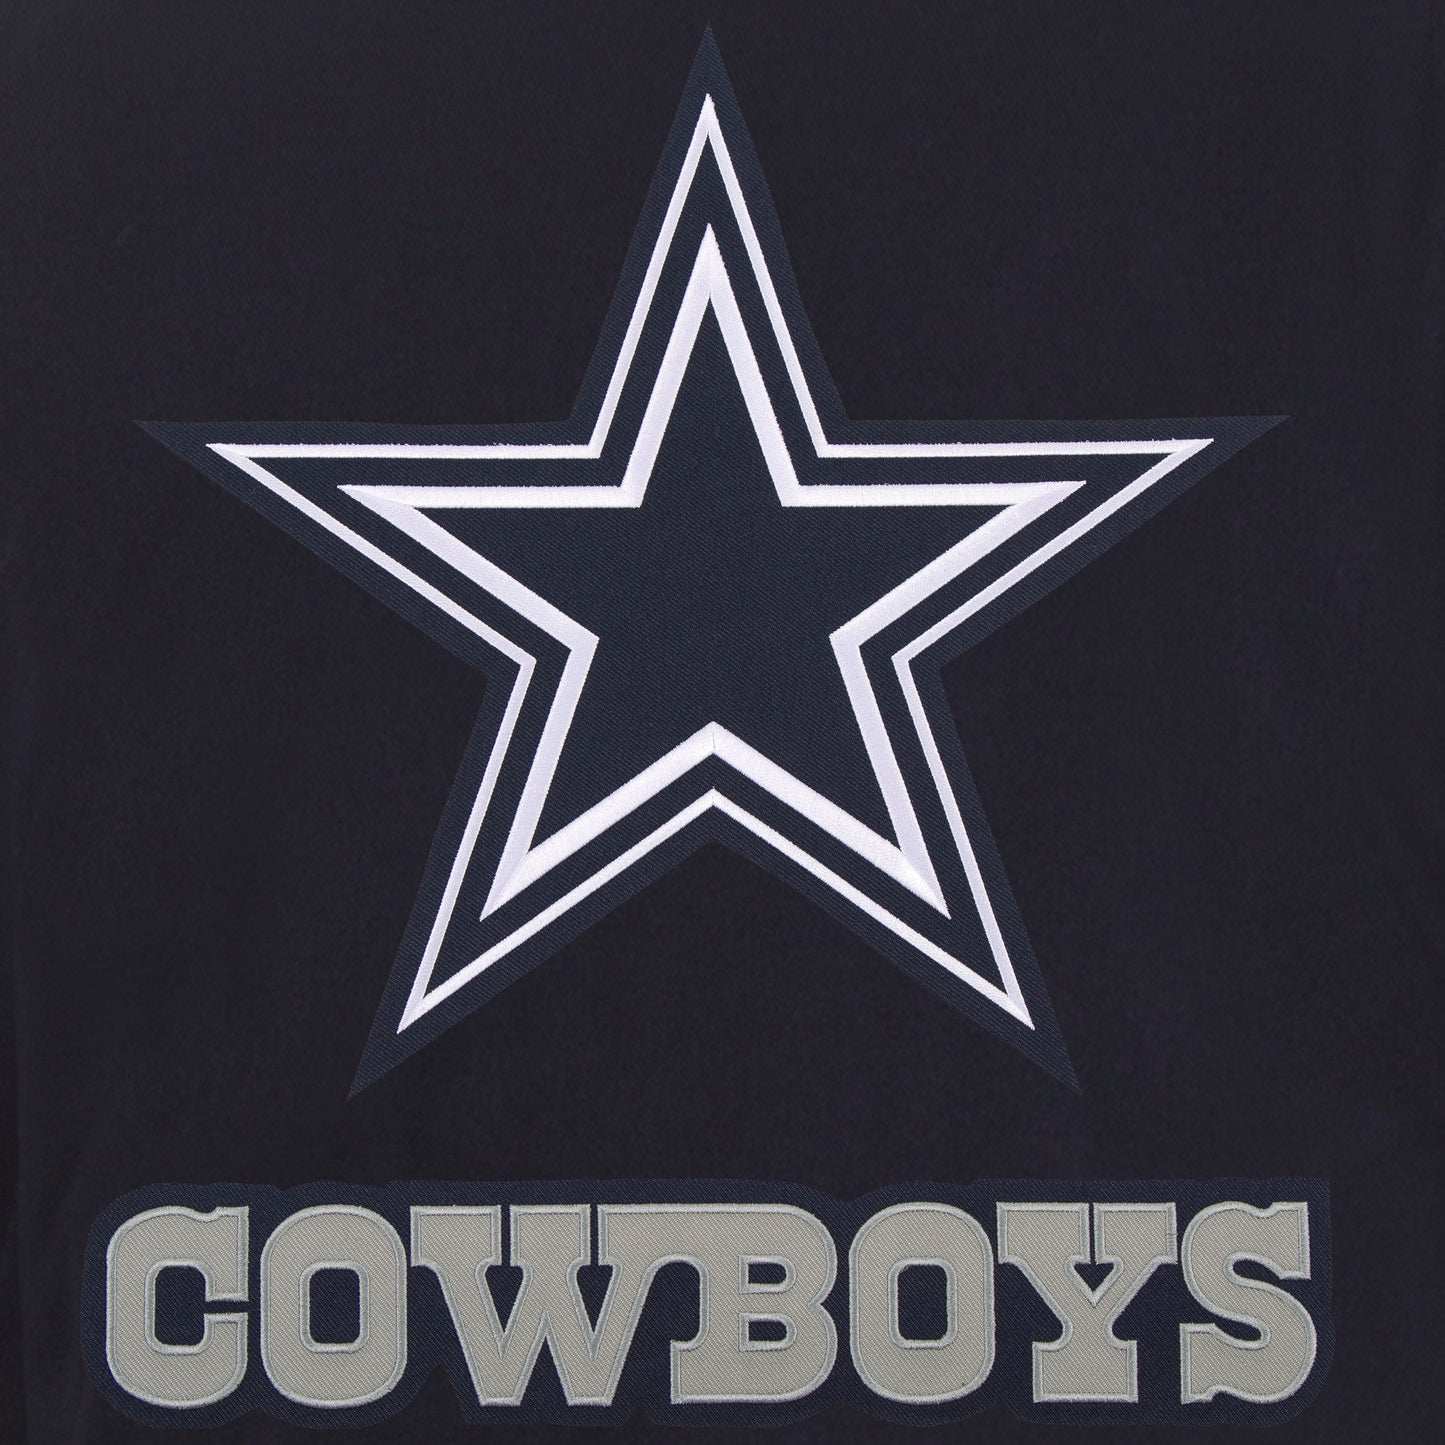 Dallas Cowboys Poly-Twill Jacket